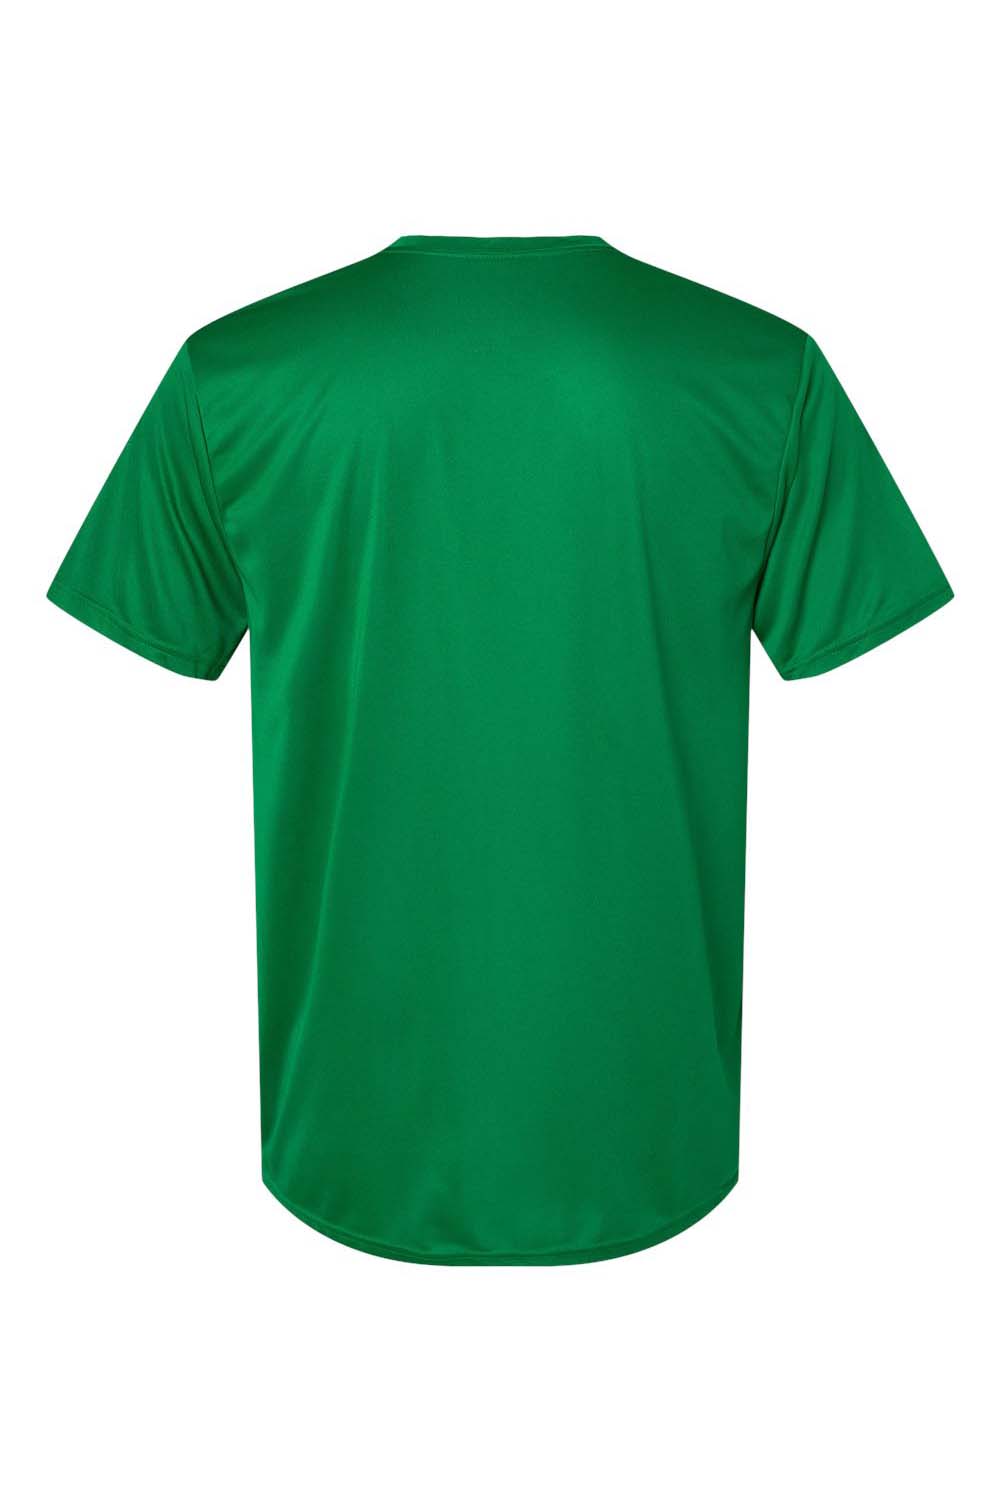 Augusta Sportswear 790 Mens Moisture Wicking Short Sleeve Crewneck T-Shirt Kelly Green Model Flat Back